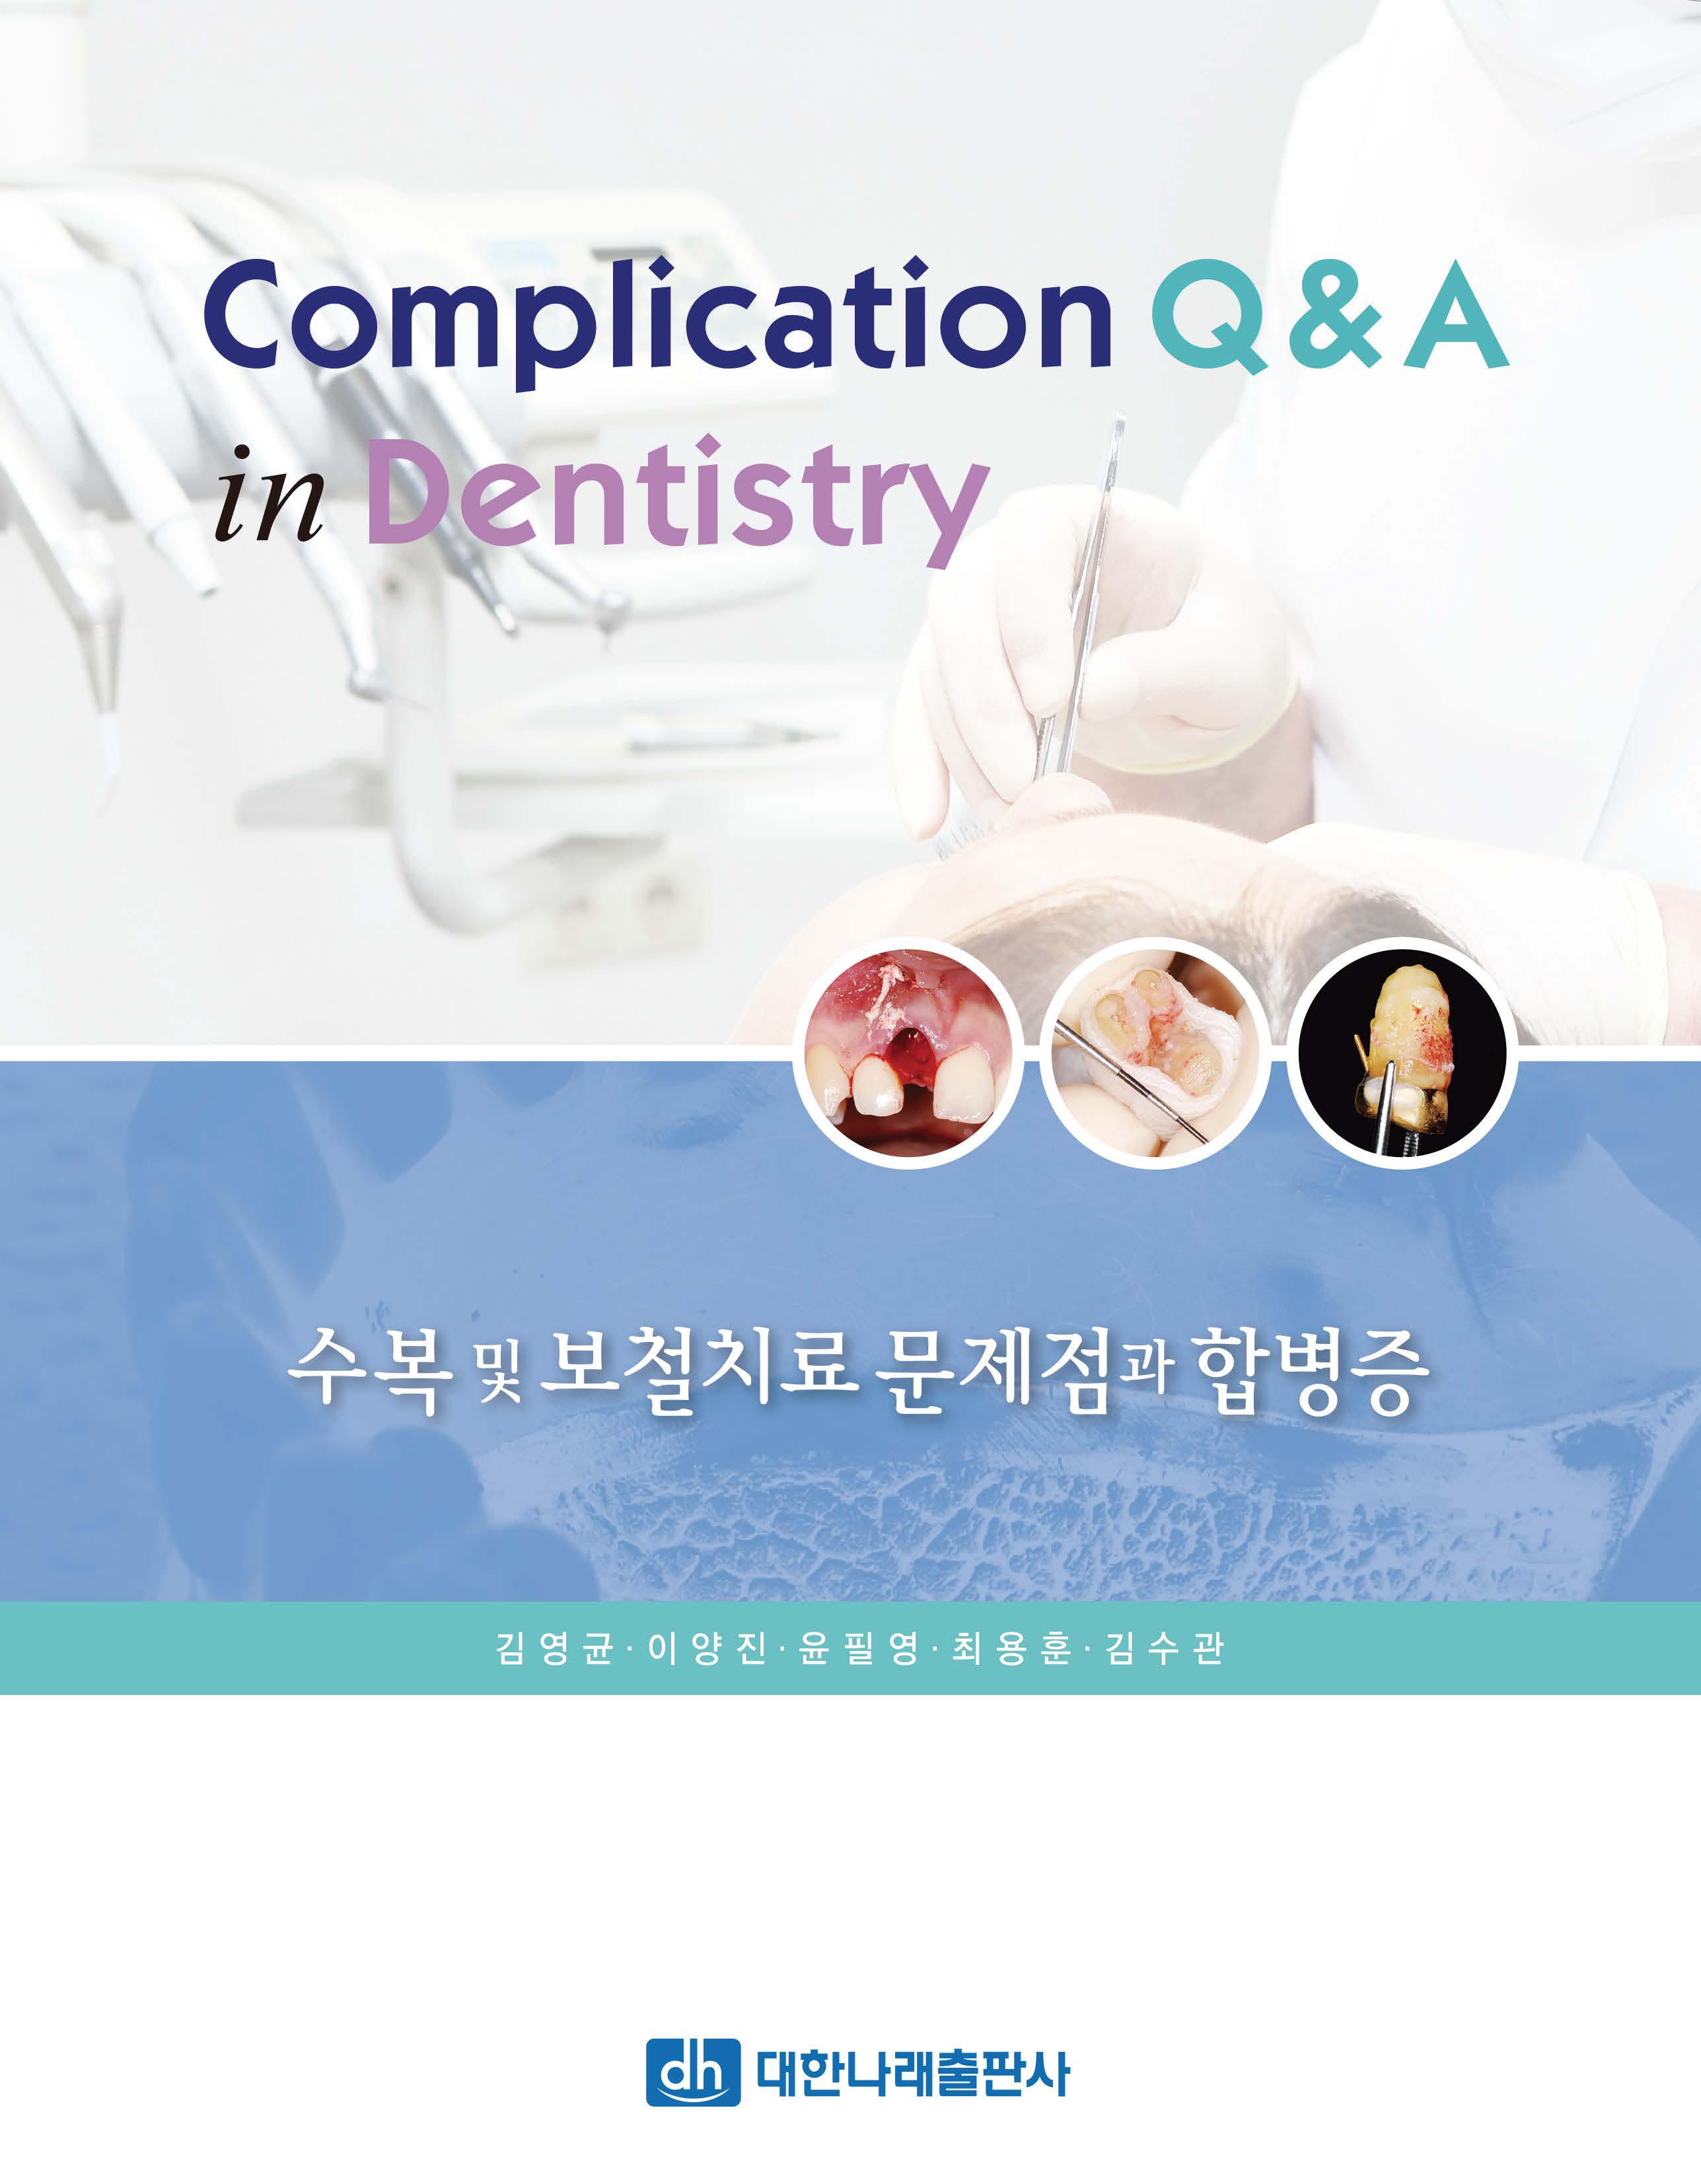 Complication Q & A in Dentistry - 수복 및 보철치료 문제점과 합병증